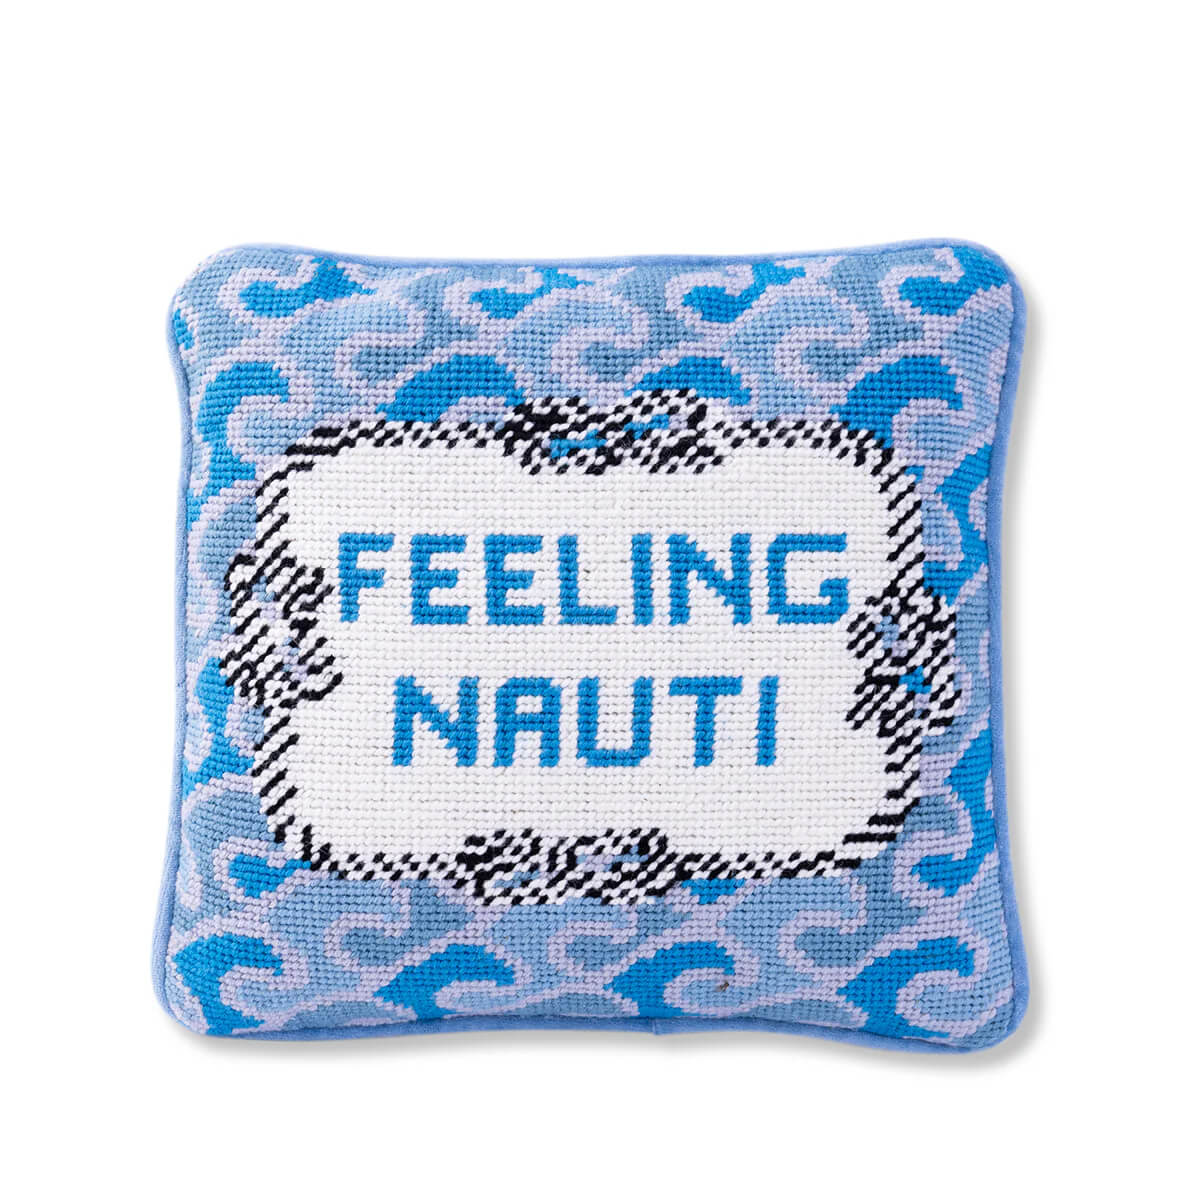 Furbish Studio Nauti Needlepoint Pillow blue front | MILK MONEY milkmoney.co | white elephant gift ideas, gift, mother's day gift ideas, white elephant gift, gift shops near me, cute home decor, mother's day gift, cute home accents, handmade in USA, elegant home decor